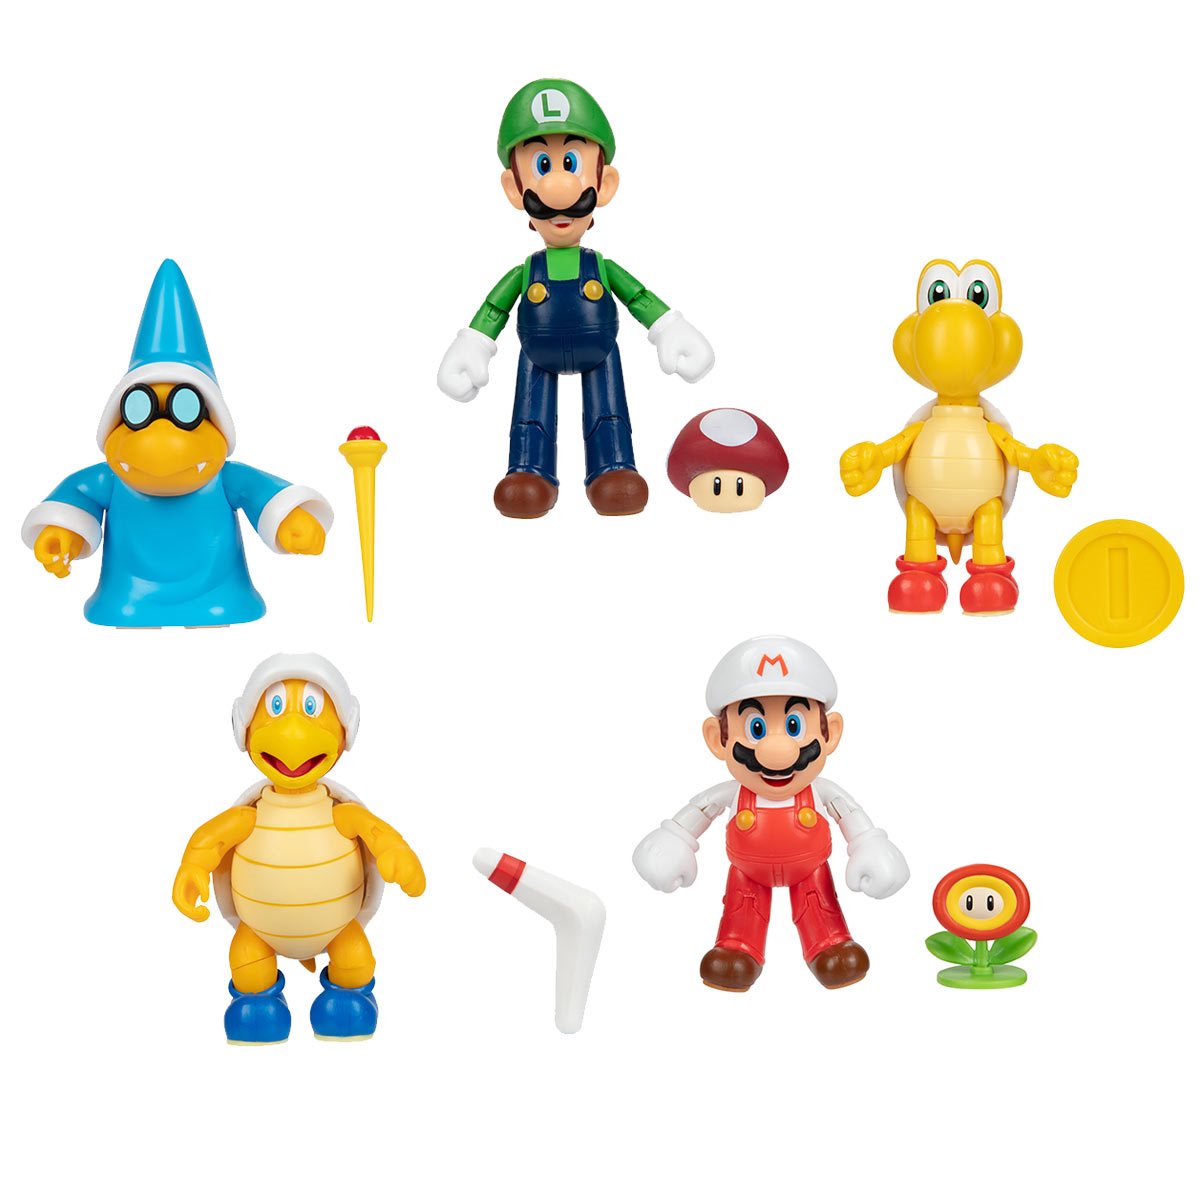 SUPER MARIO Action Figure 4 Inch Assortment - Green para Koopa Troopa, Luigi, Bro, Yoshi and more